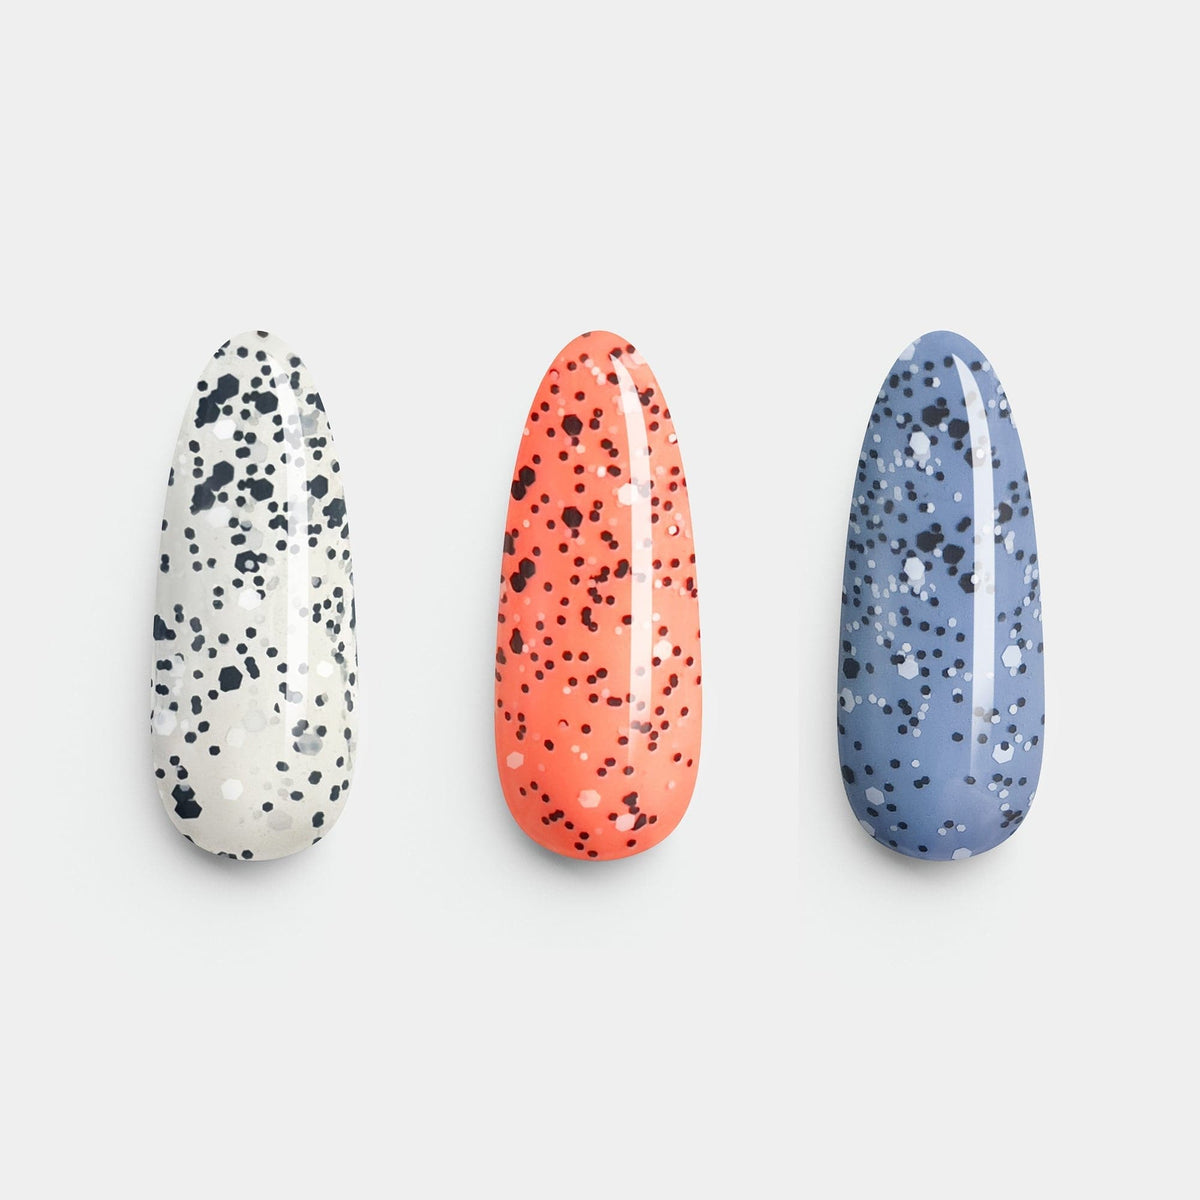 Gelous Bang Top Coat gel nail polish swatch - photographed in Australia